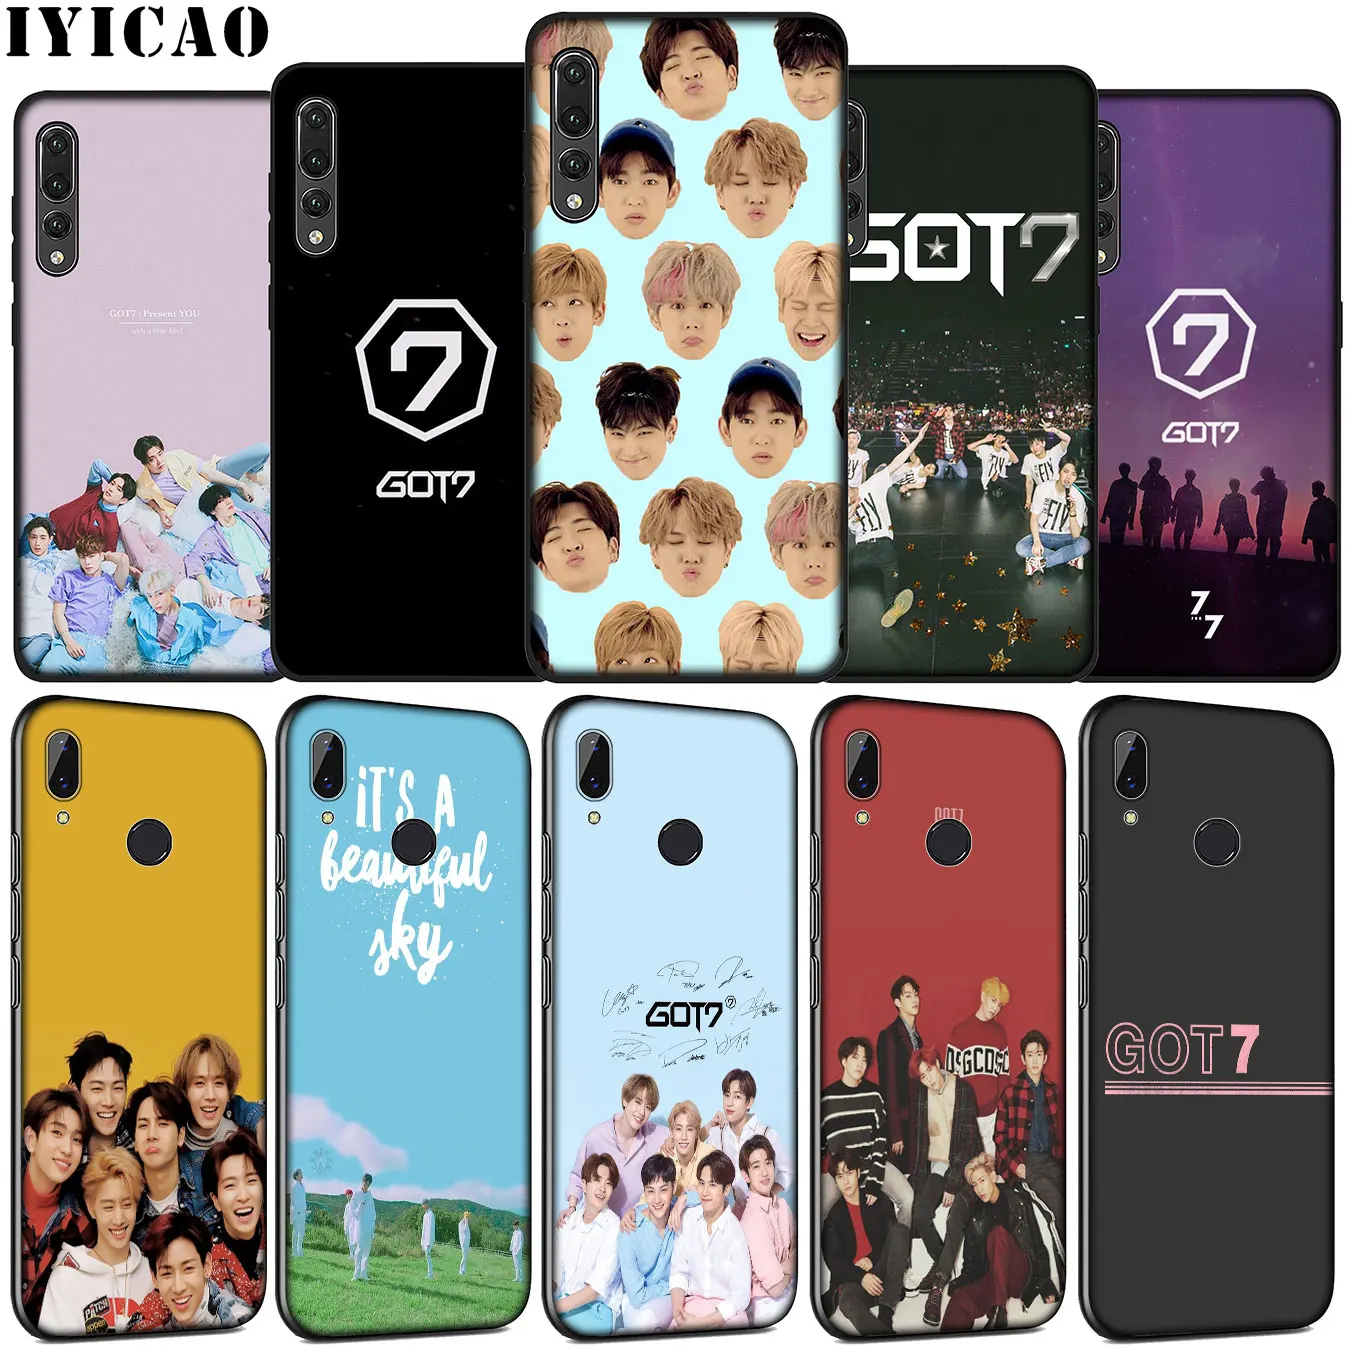 IYICAO Got7 K Pop Got 7 Soft Silicone Case for Huawei P30 P20 Pro P10 P9 Lite Mini 2017 2016 Black Cover P Smart Z 2019 | Мобильные